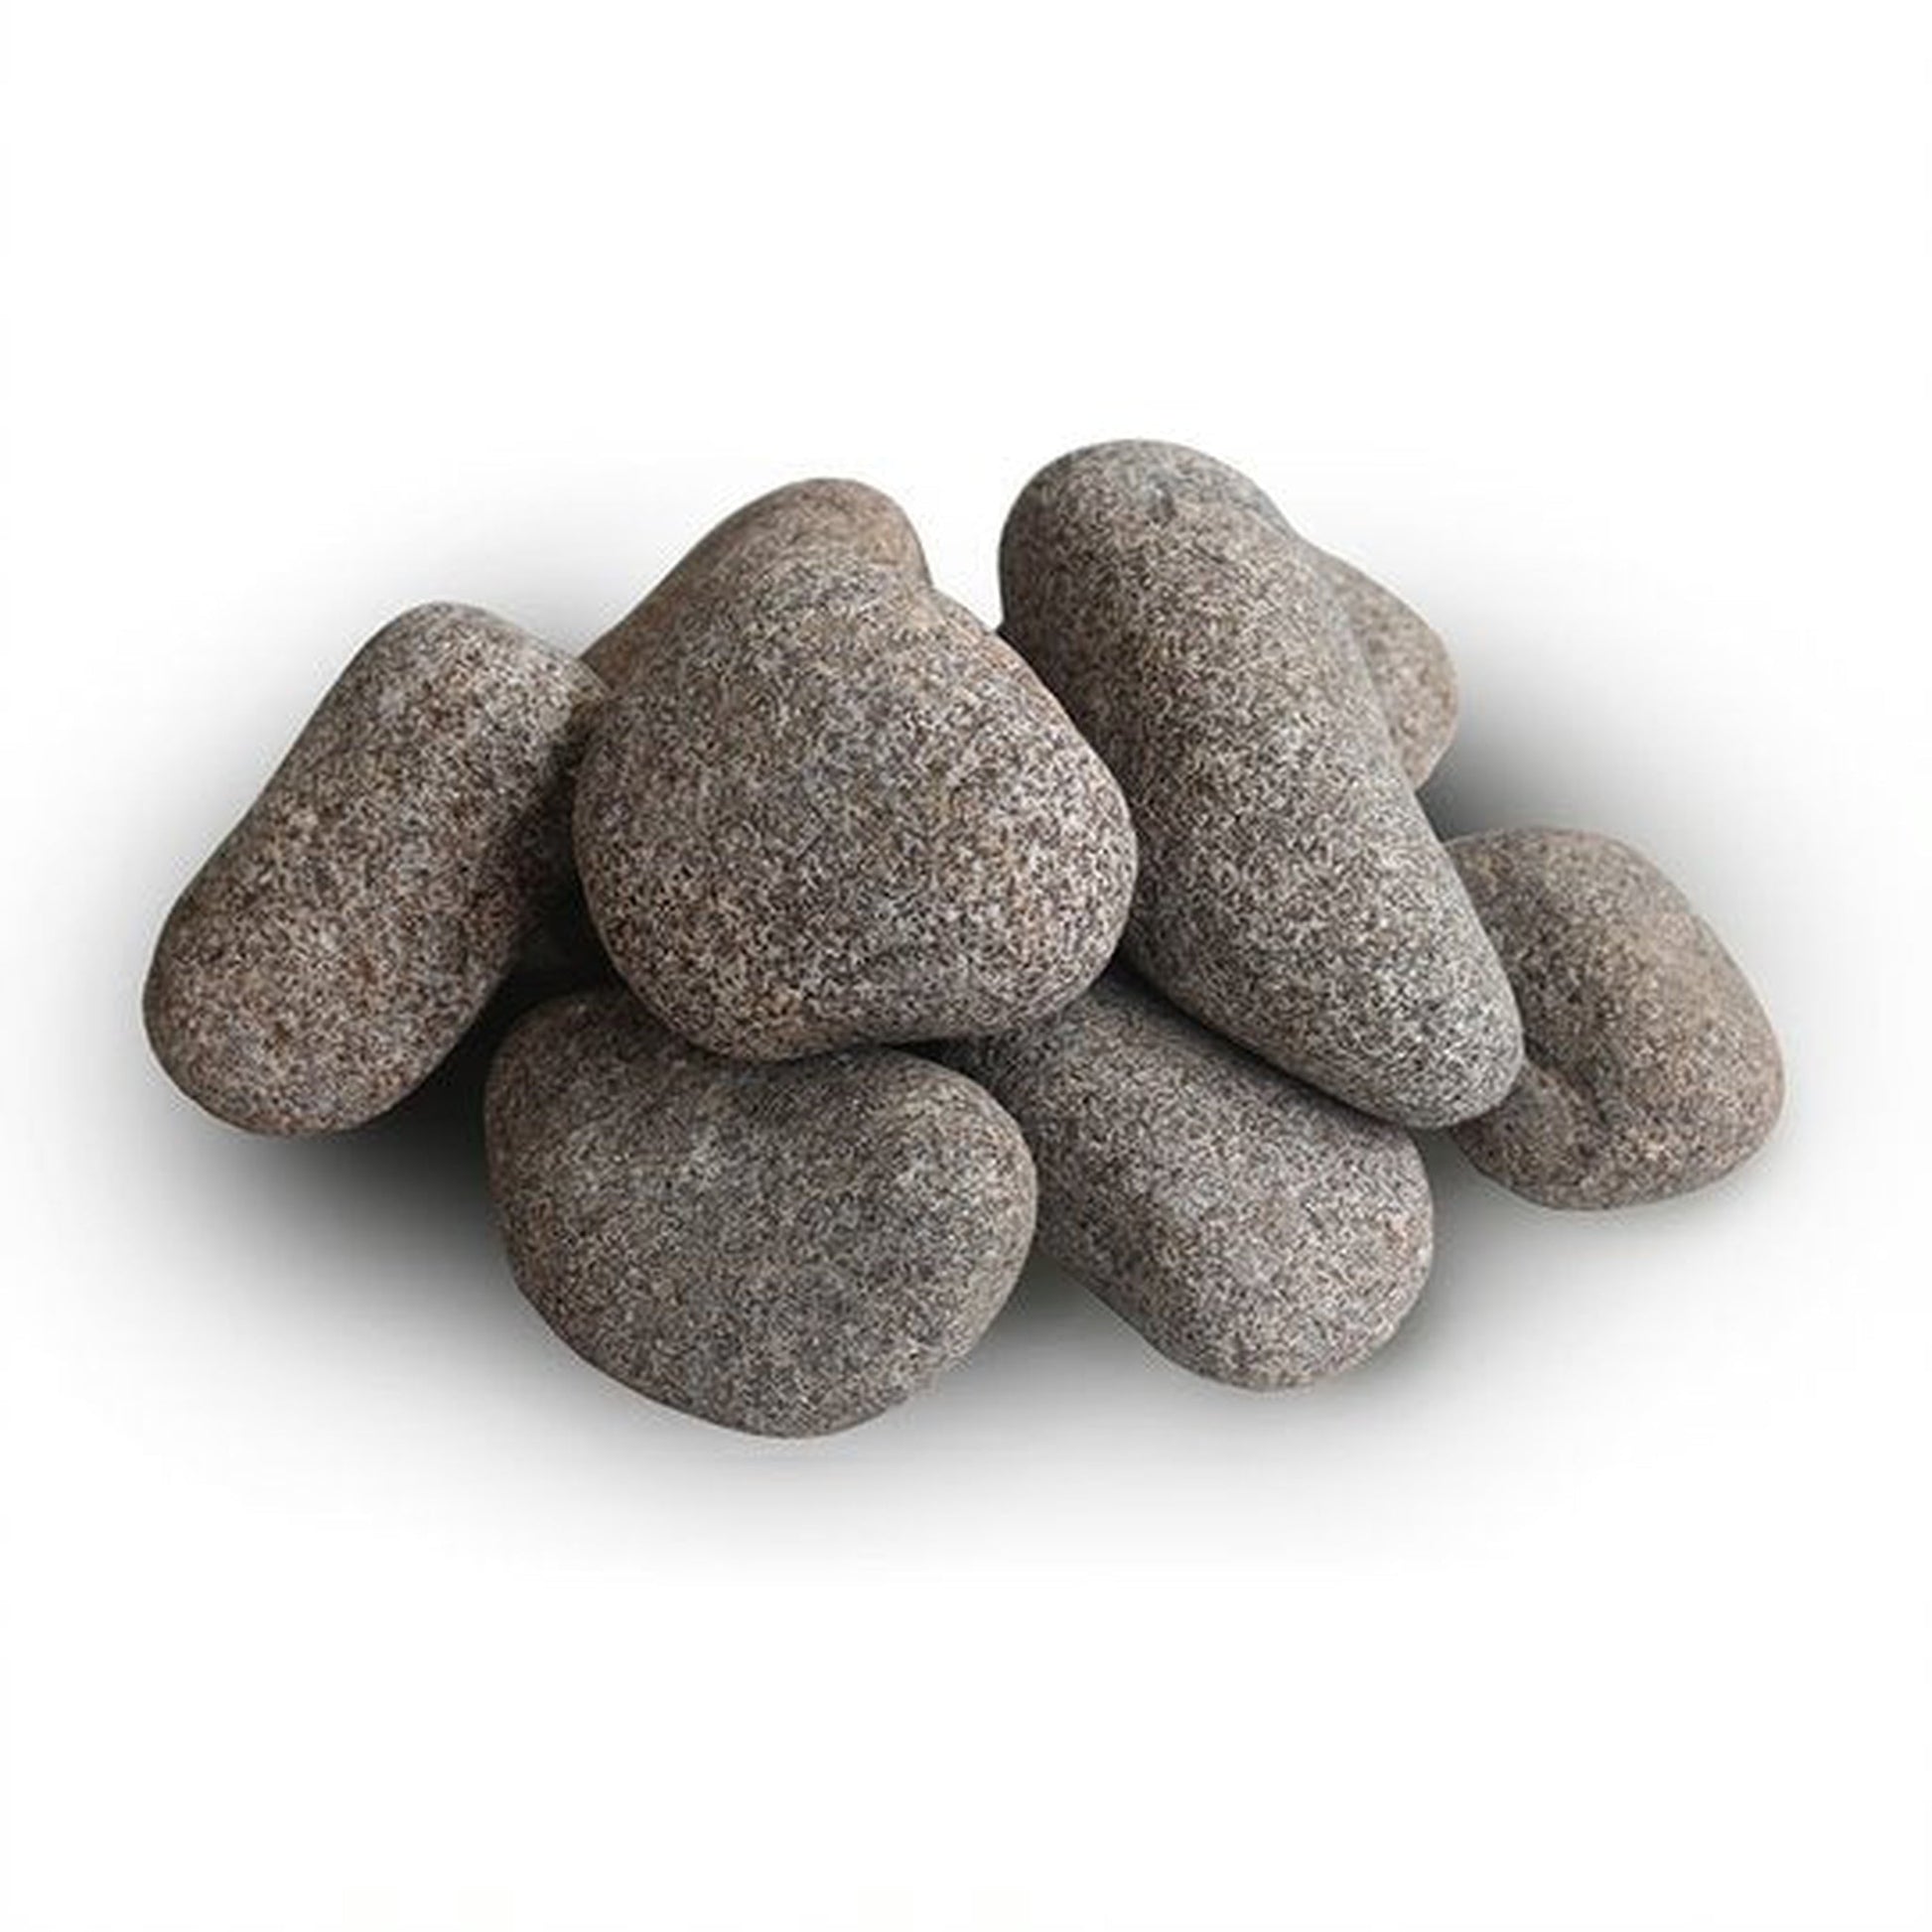 HUMM Small 33 lbs 2" - 4" Gray Rounded Olivine Granite Sauna Heater Stones